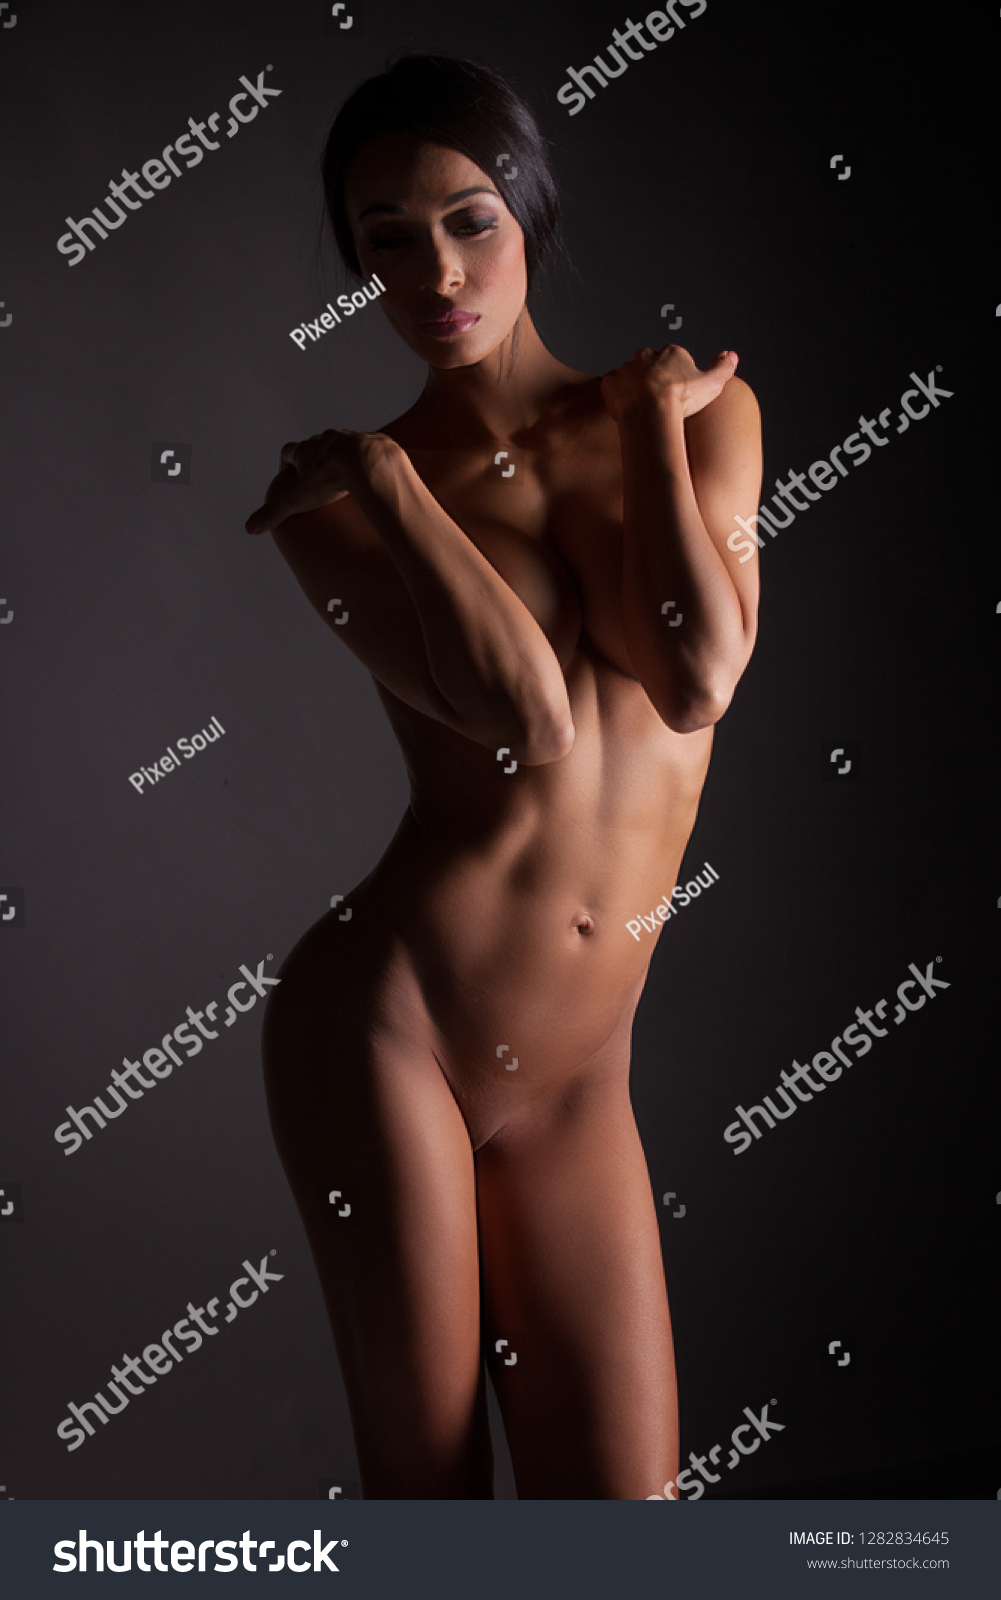 Nude Black Women Pictures